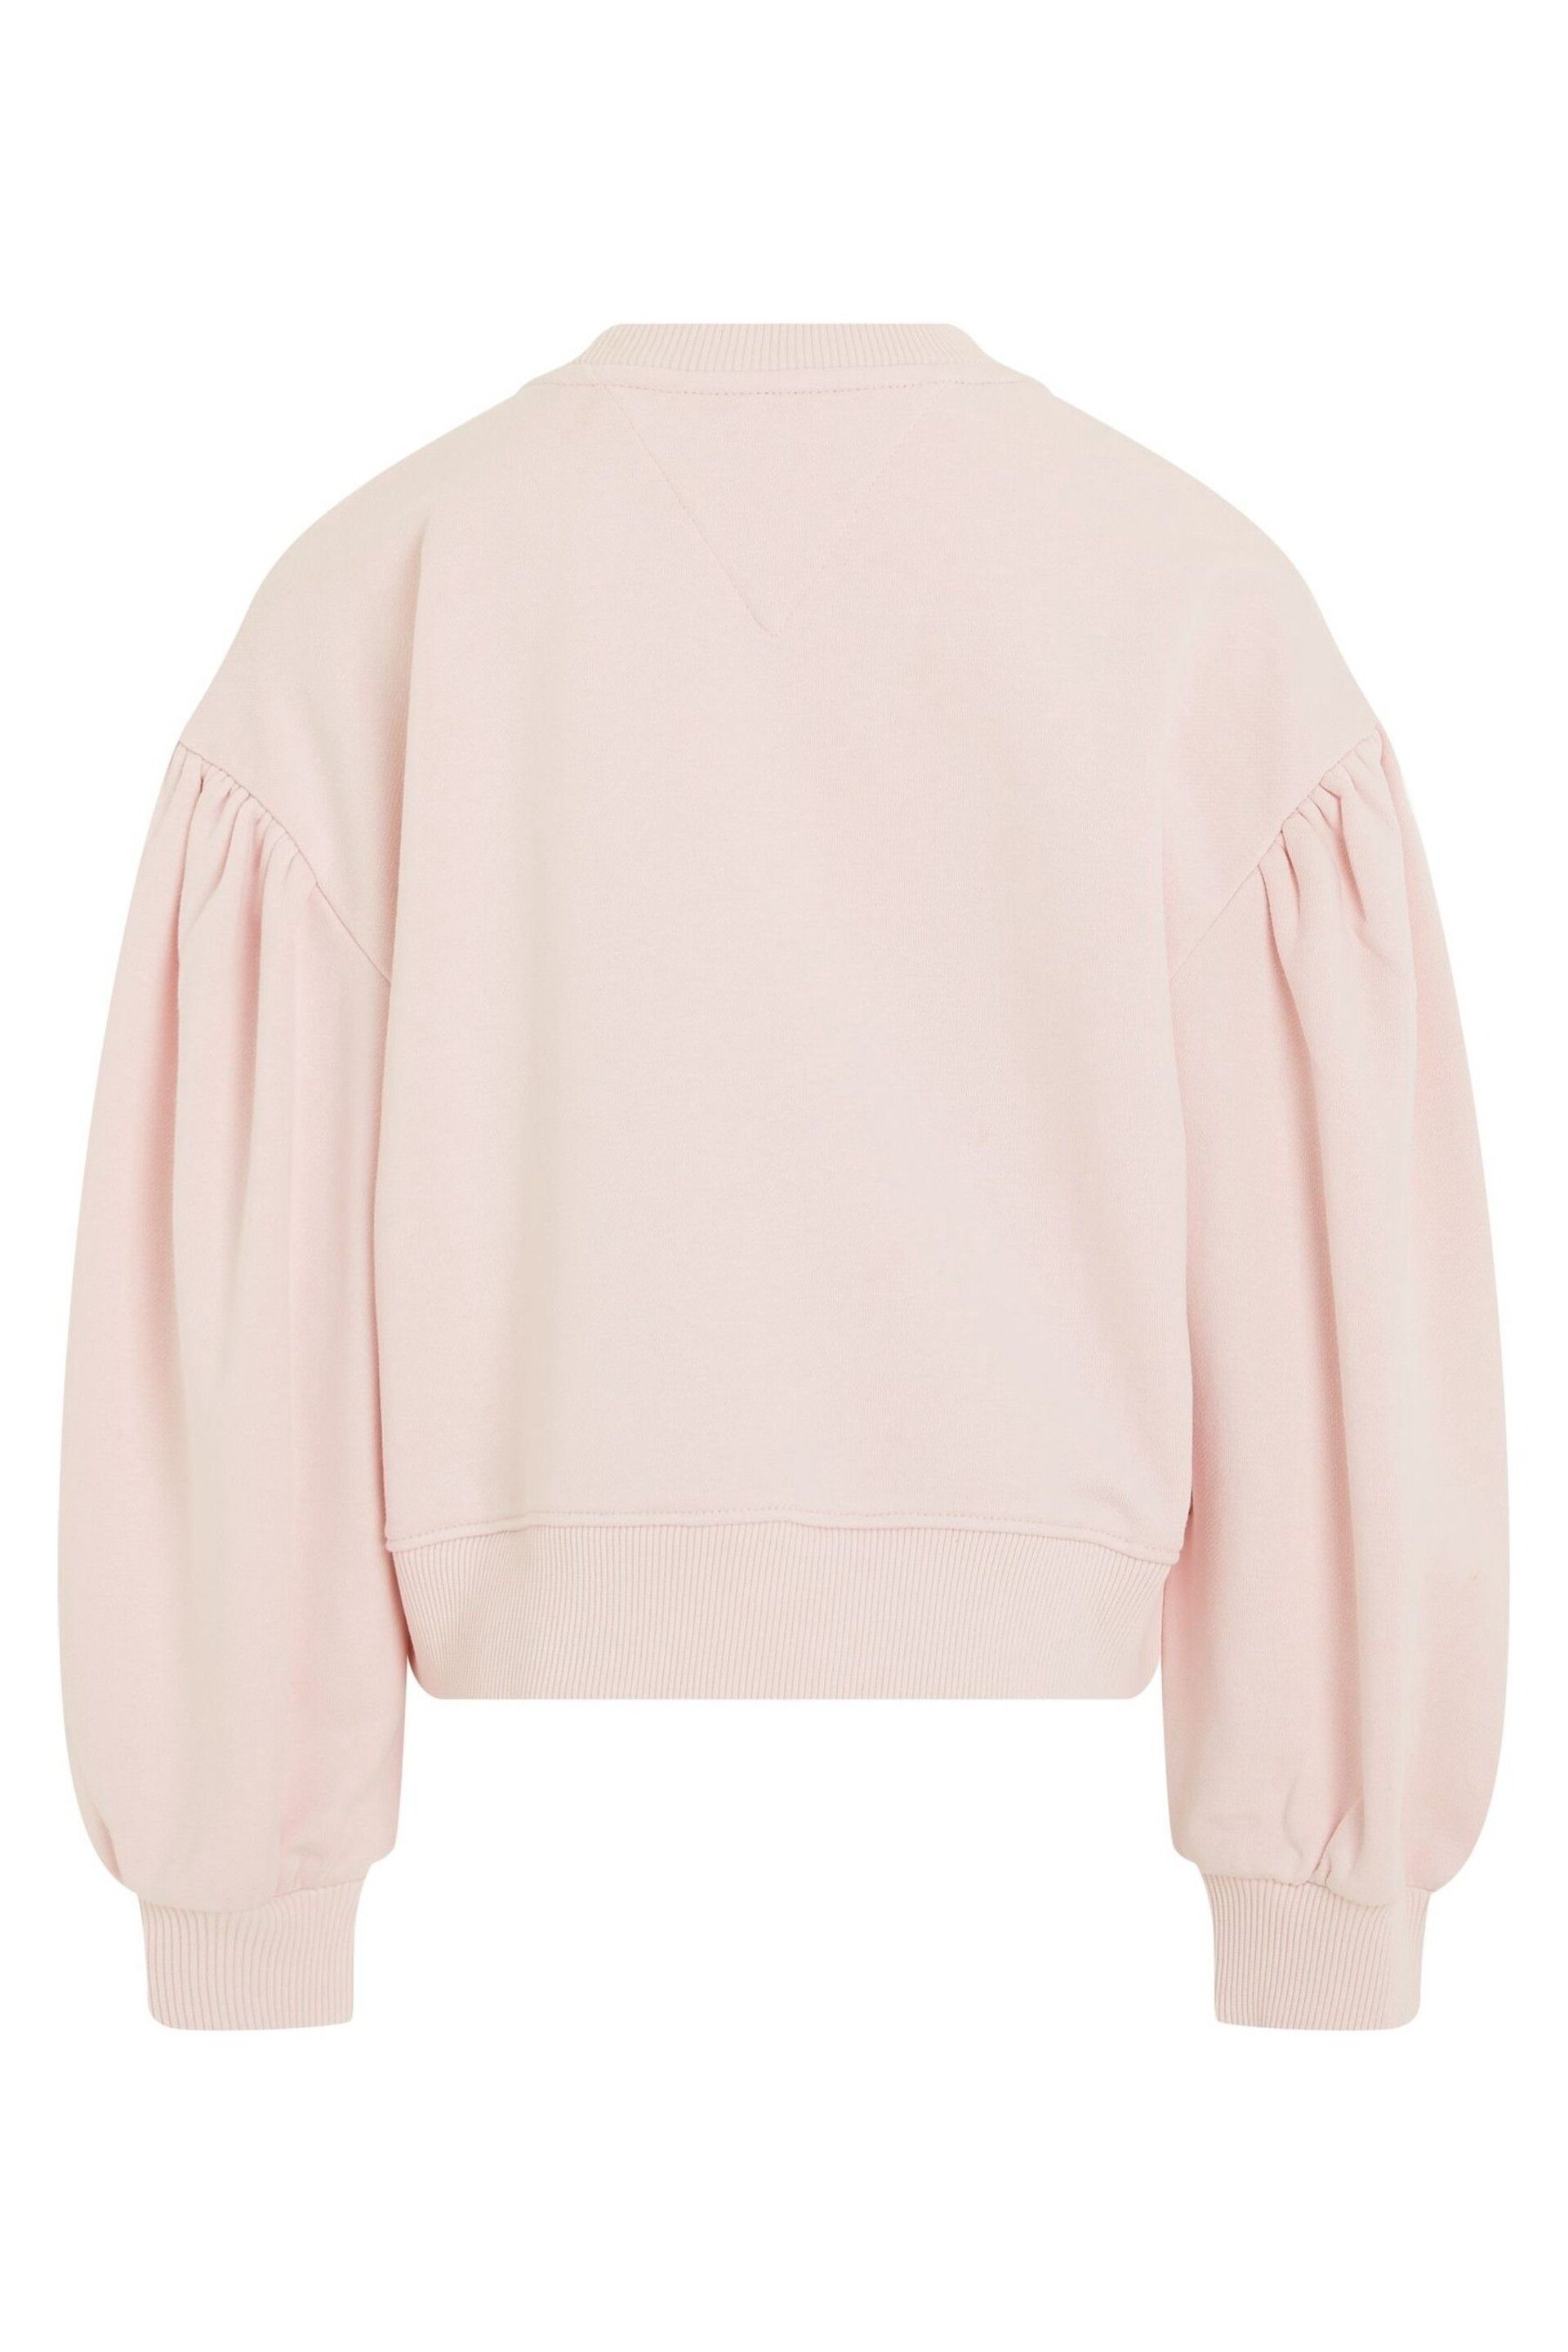 Tommy Hilfiger Pink Monotype Sweatshirt - Image 6 of 6